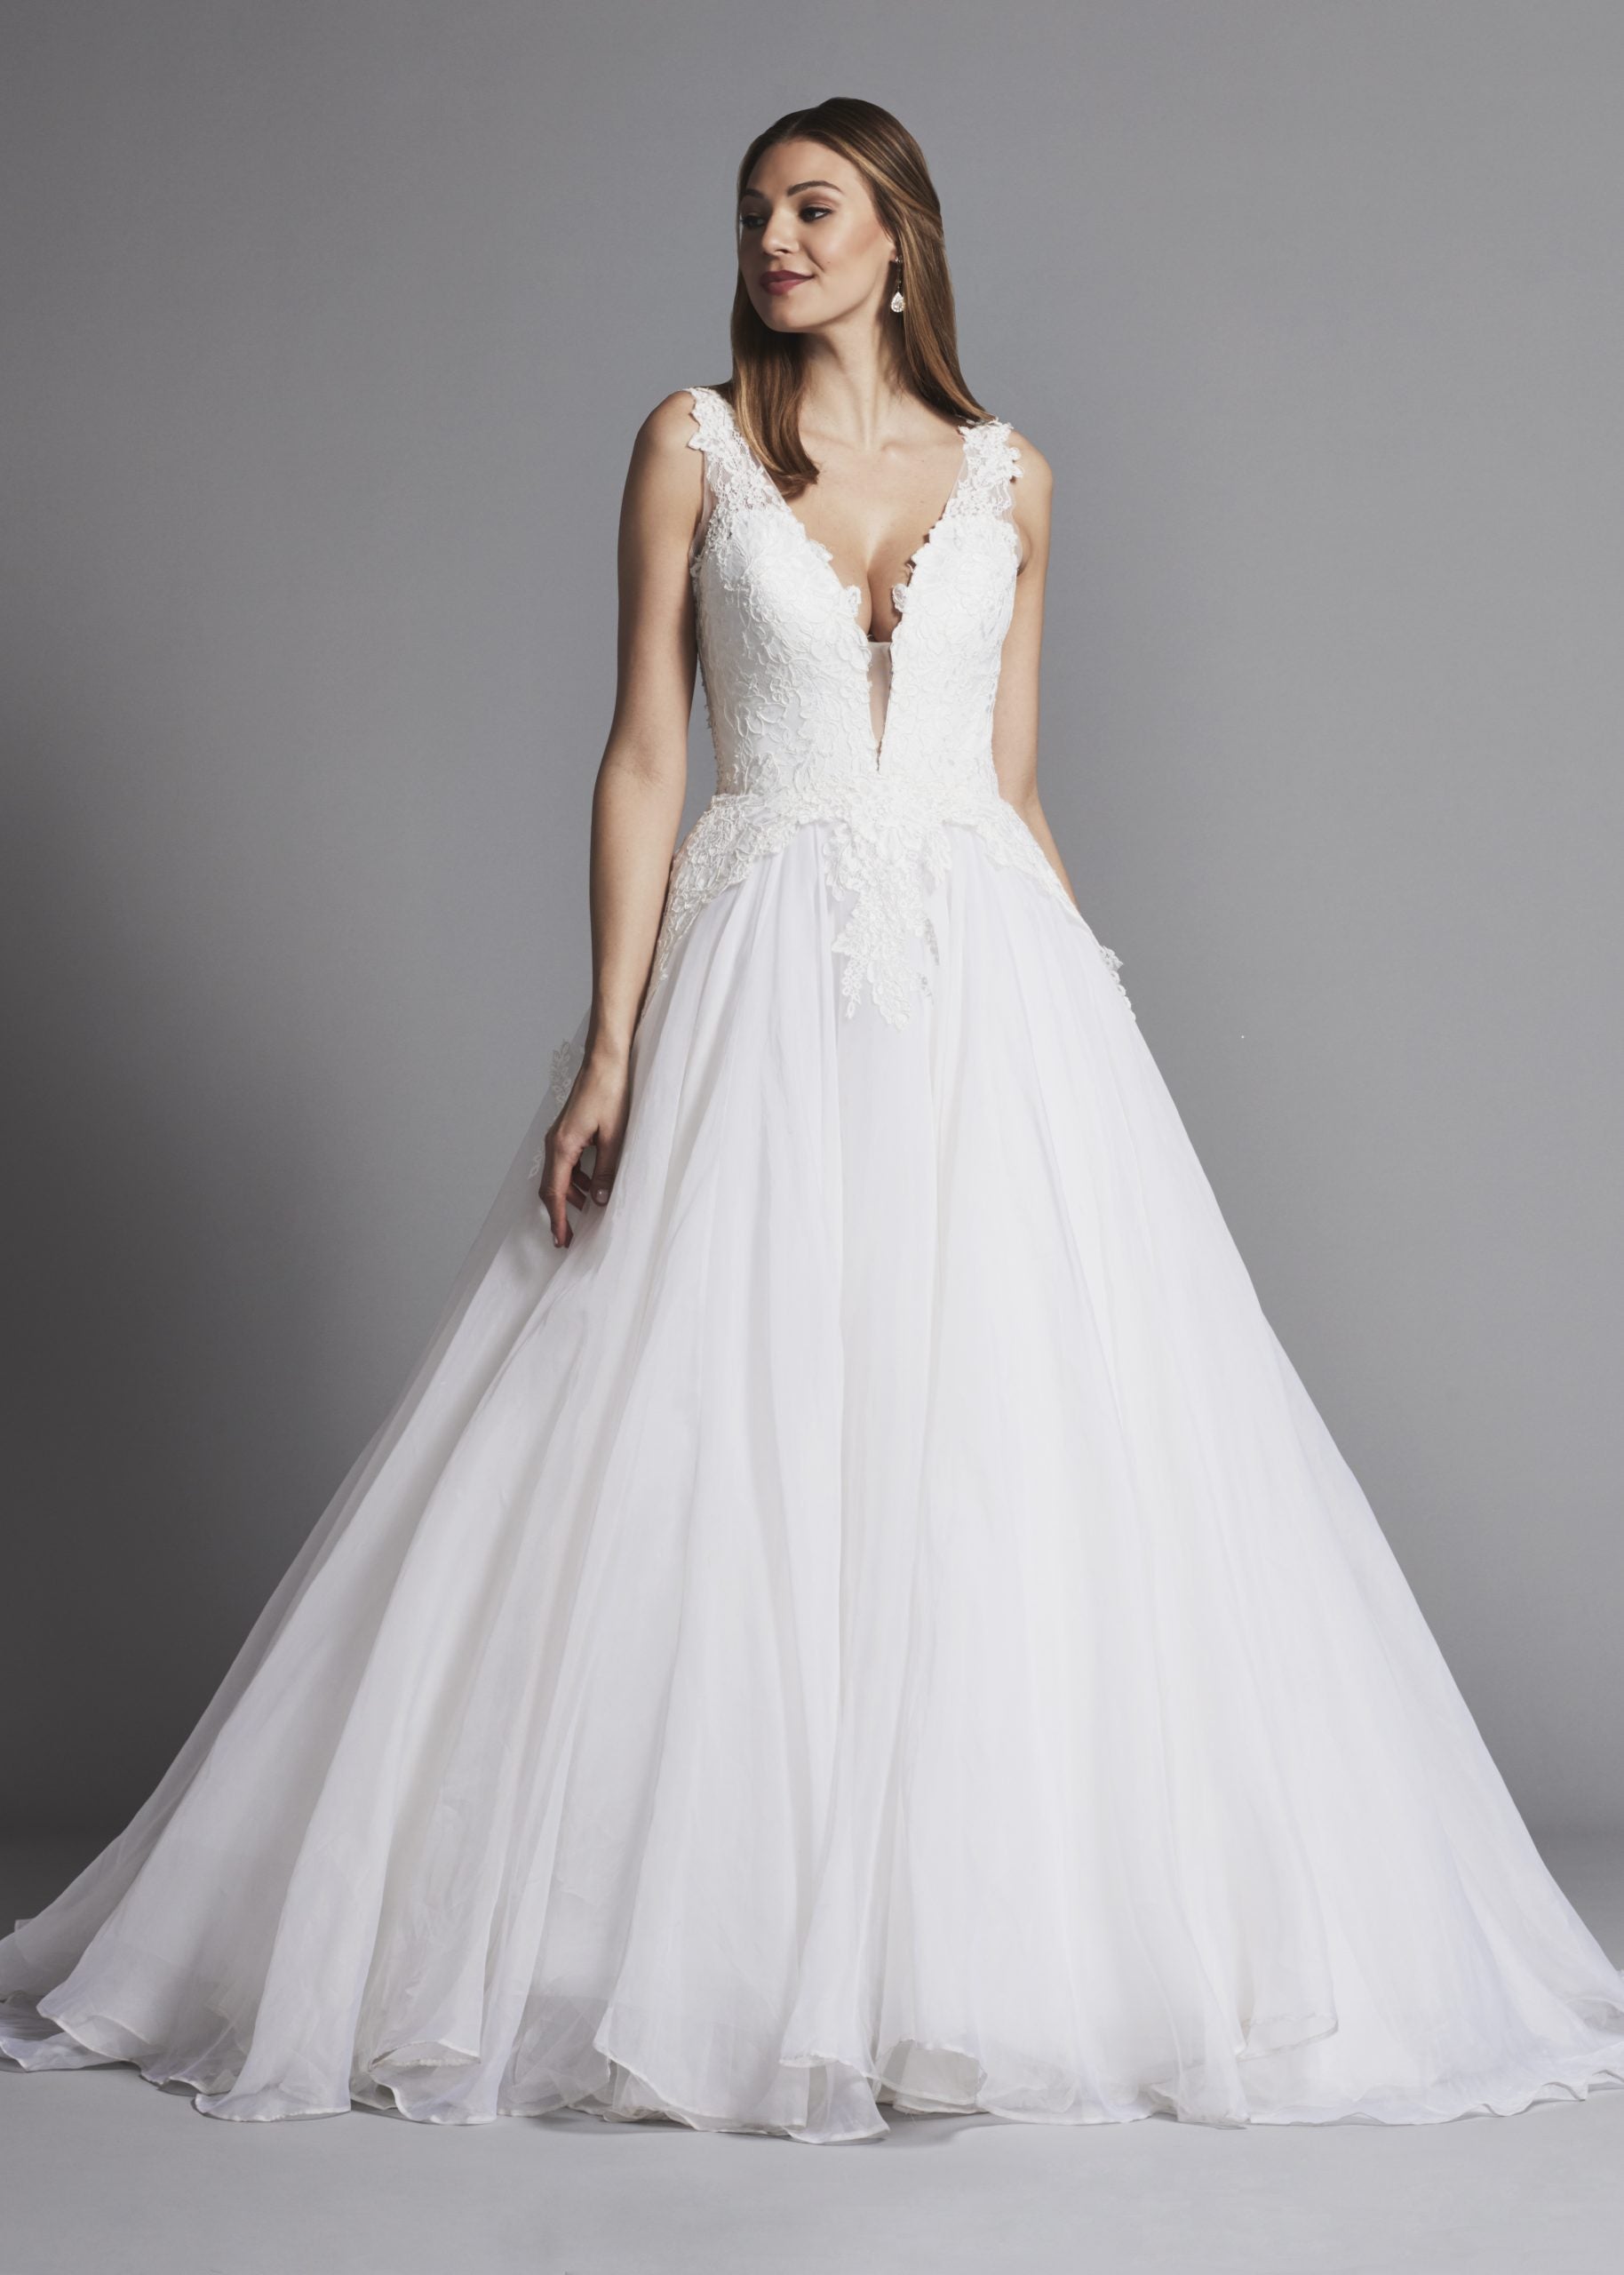 organza ball gown wedding dress